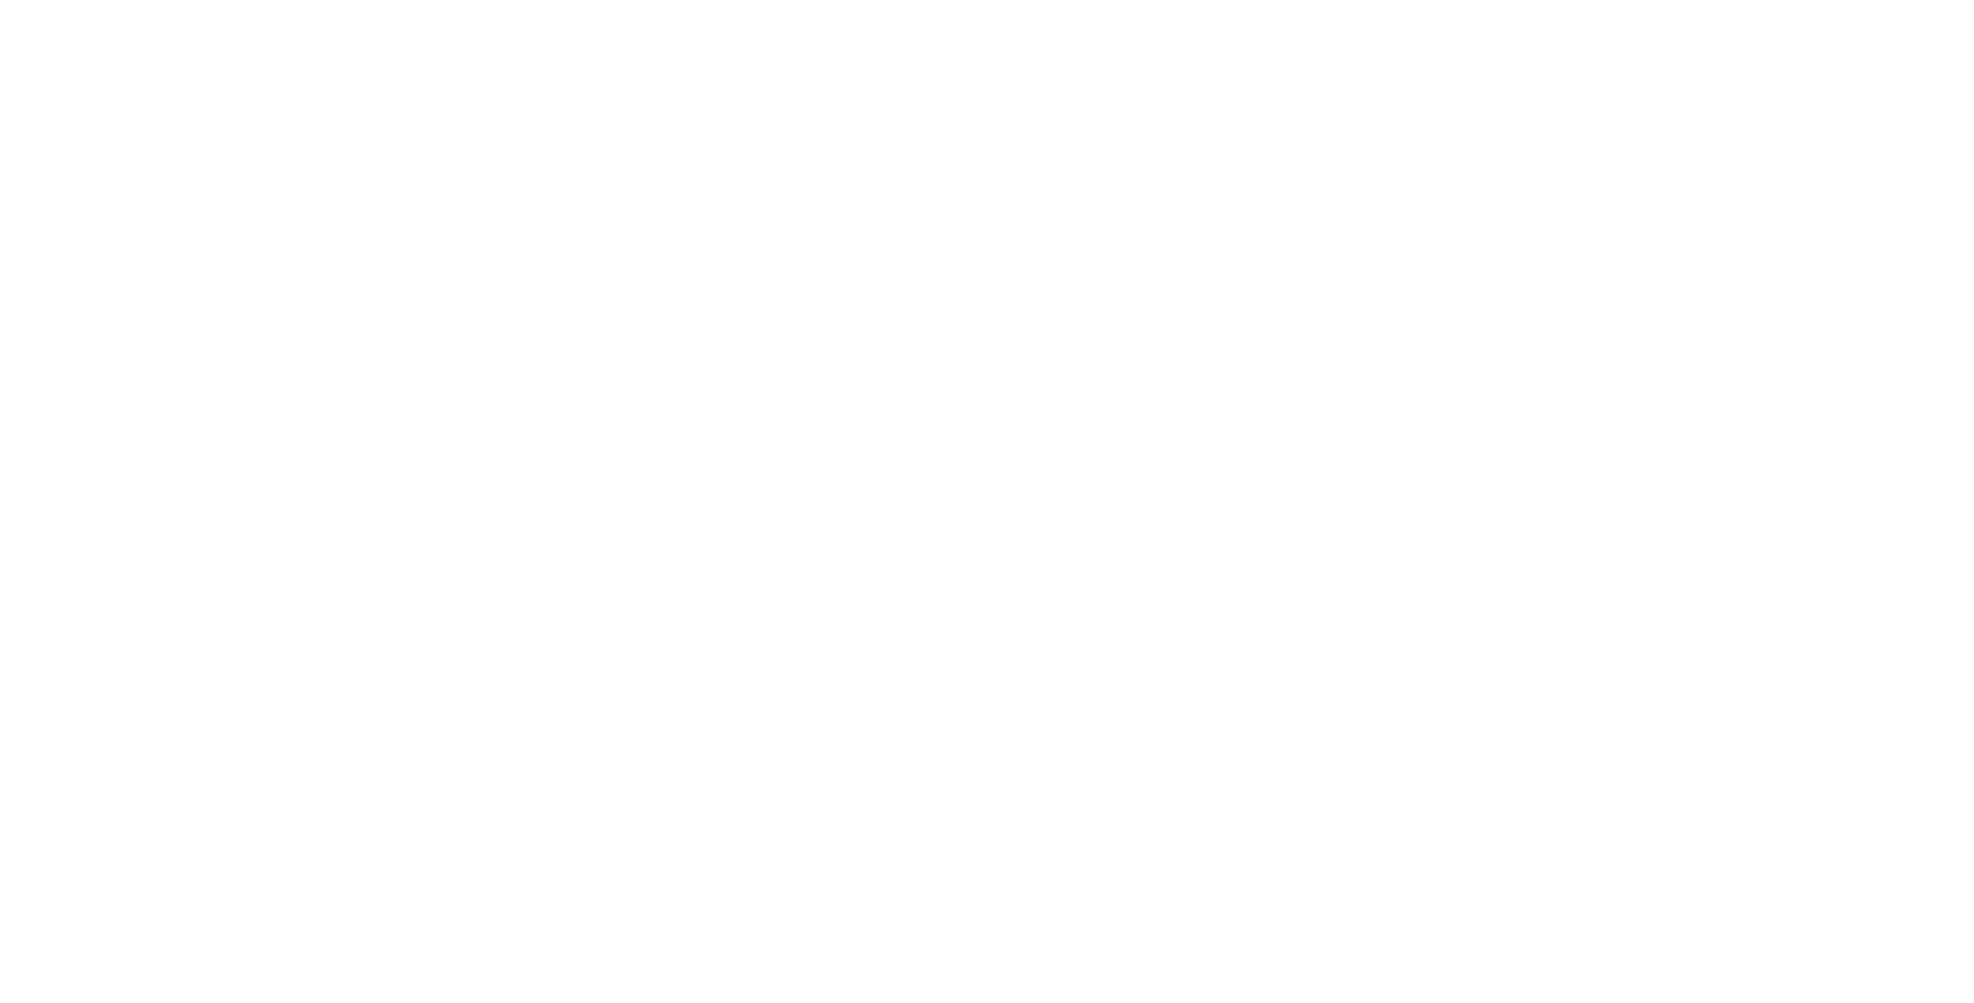 Drag Show Bar Lellebel